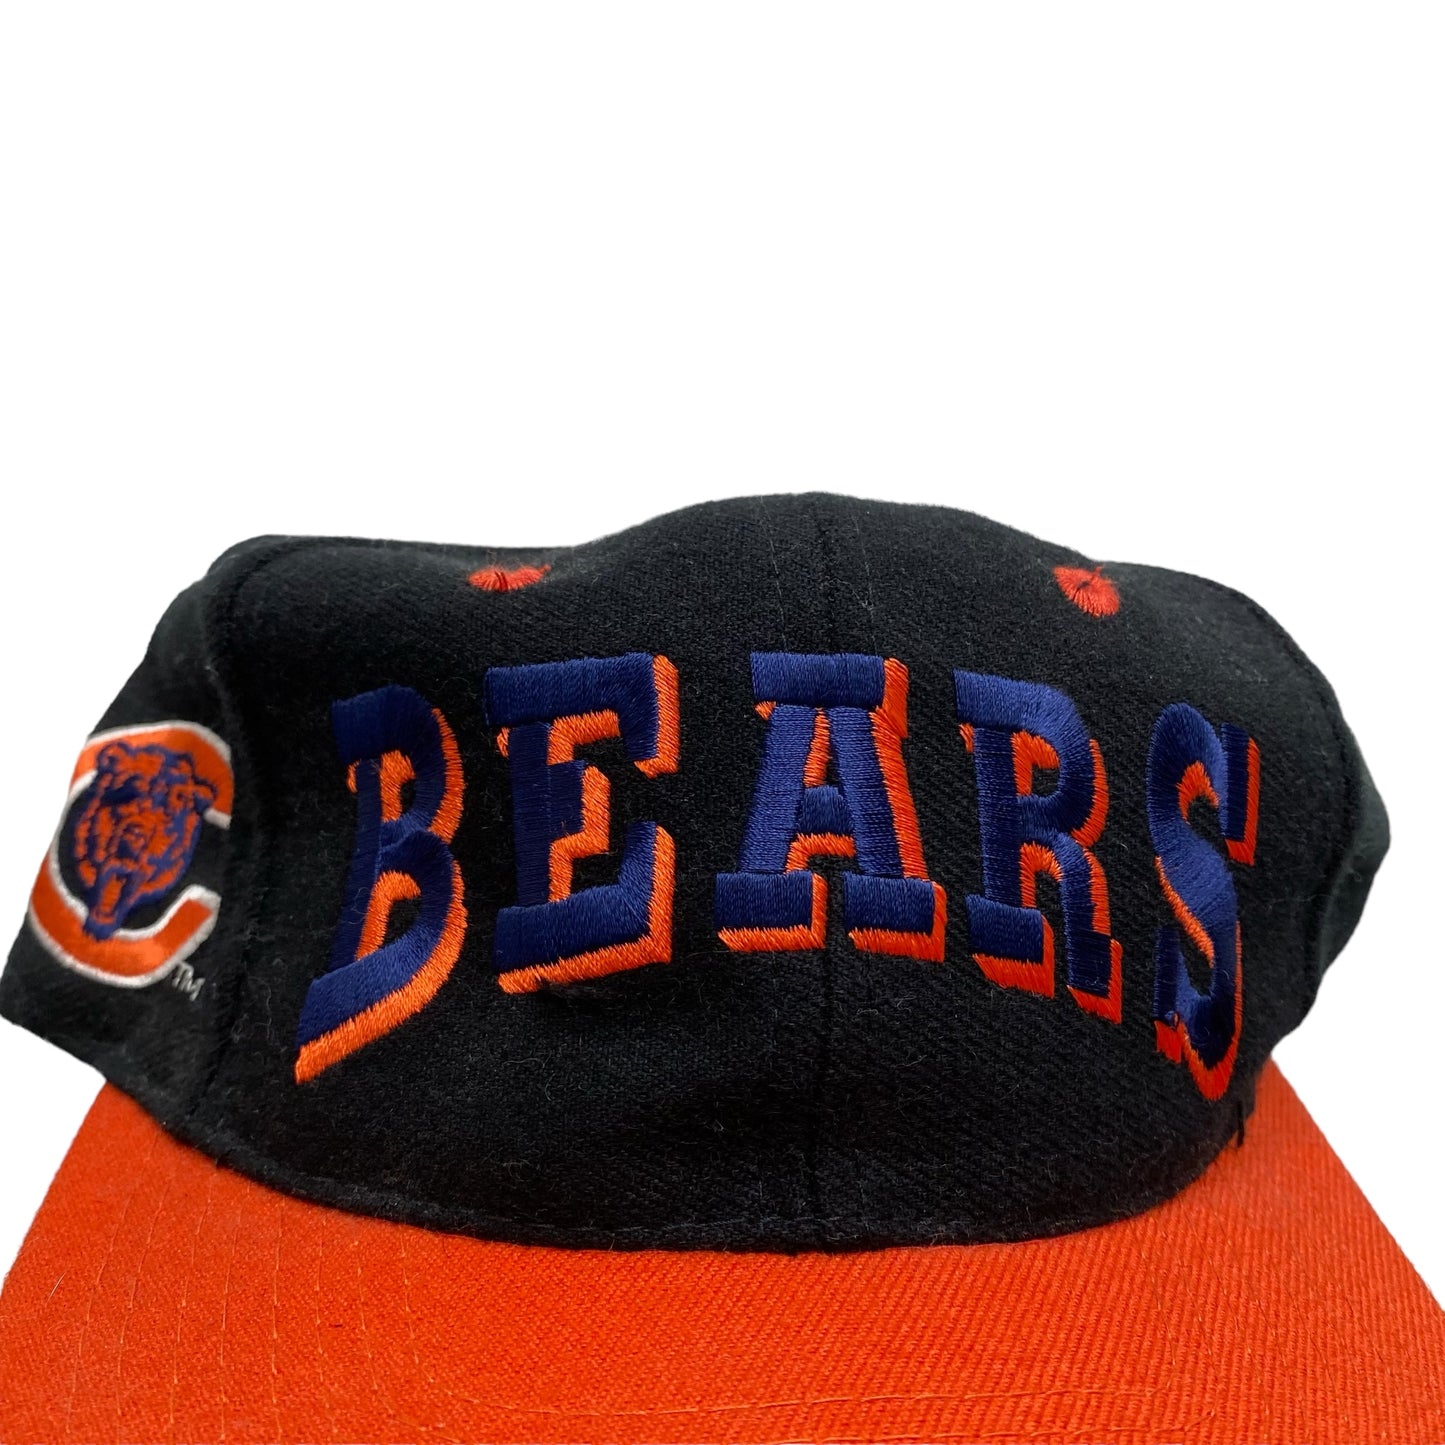 Vintage Chicago Bears NFL Black Arch Text Snap Back Hat